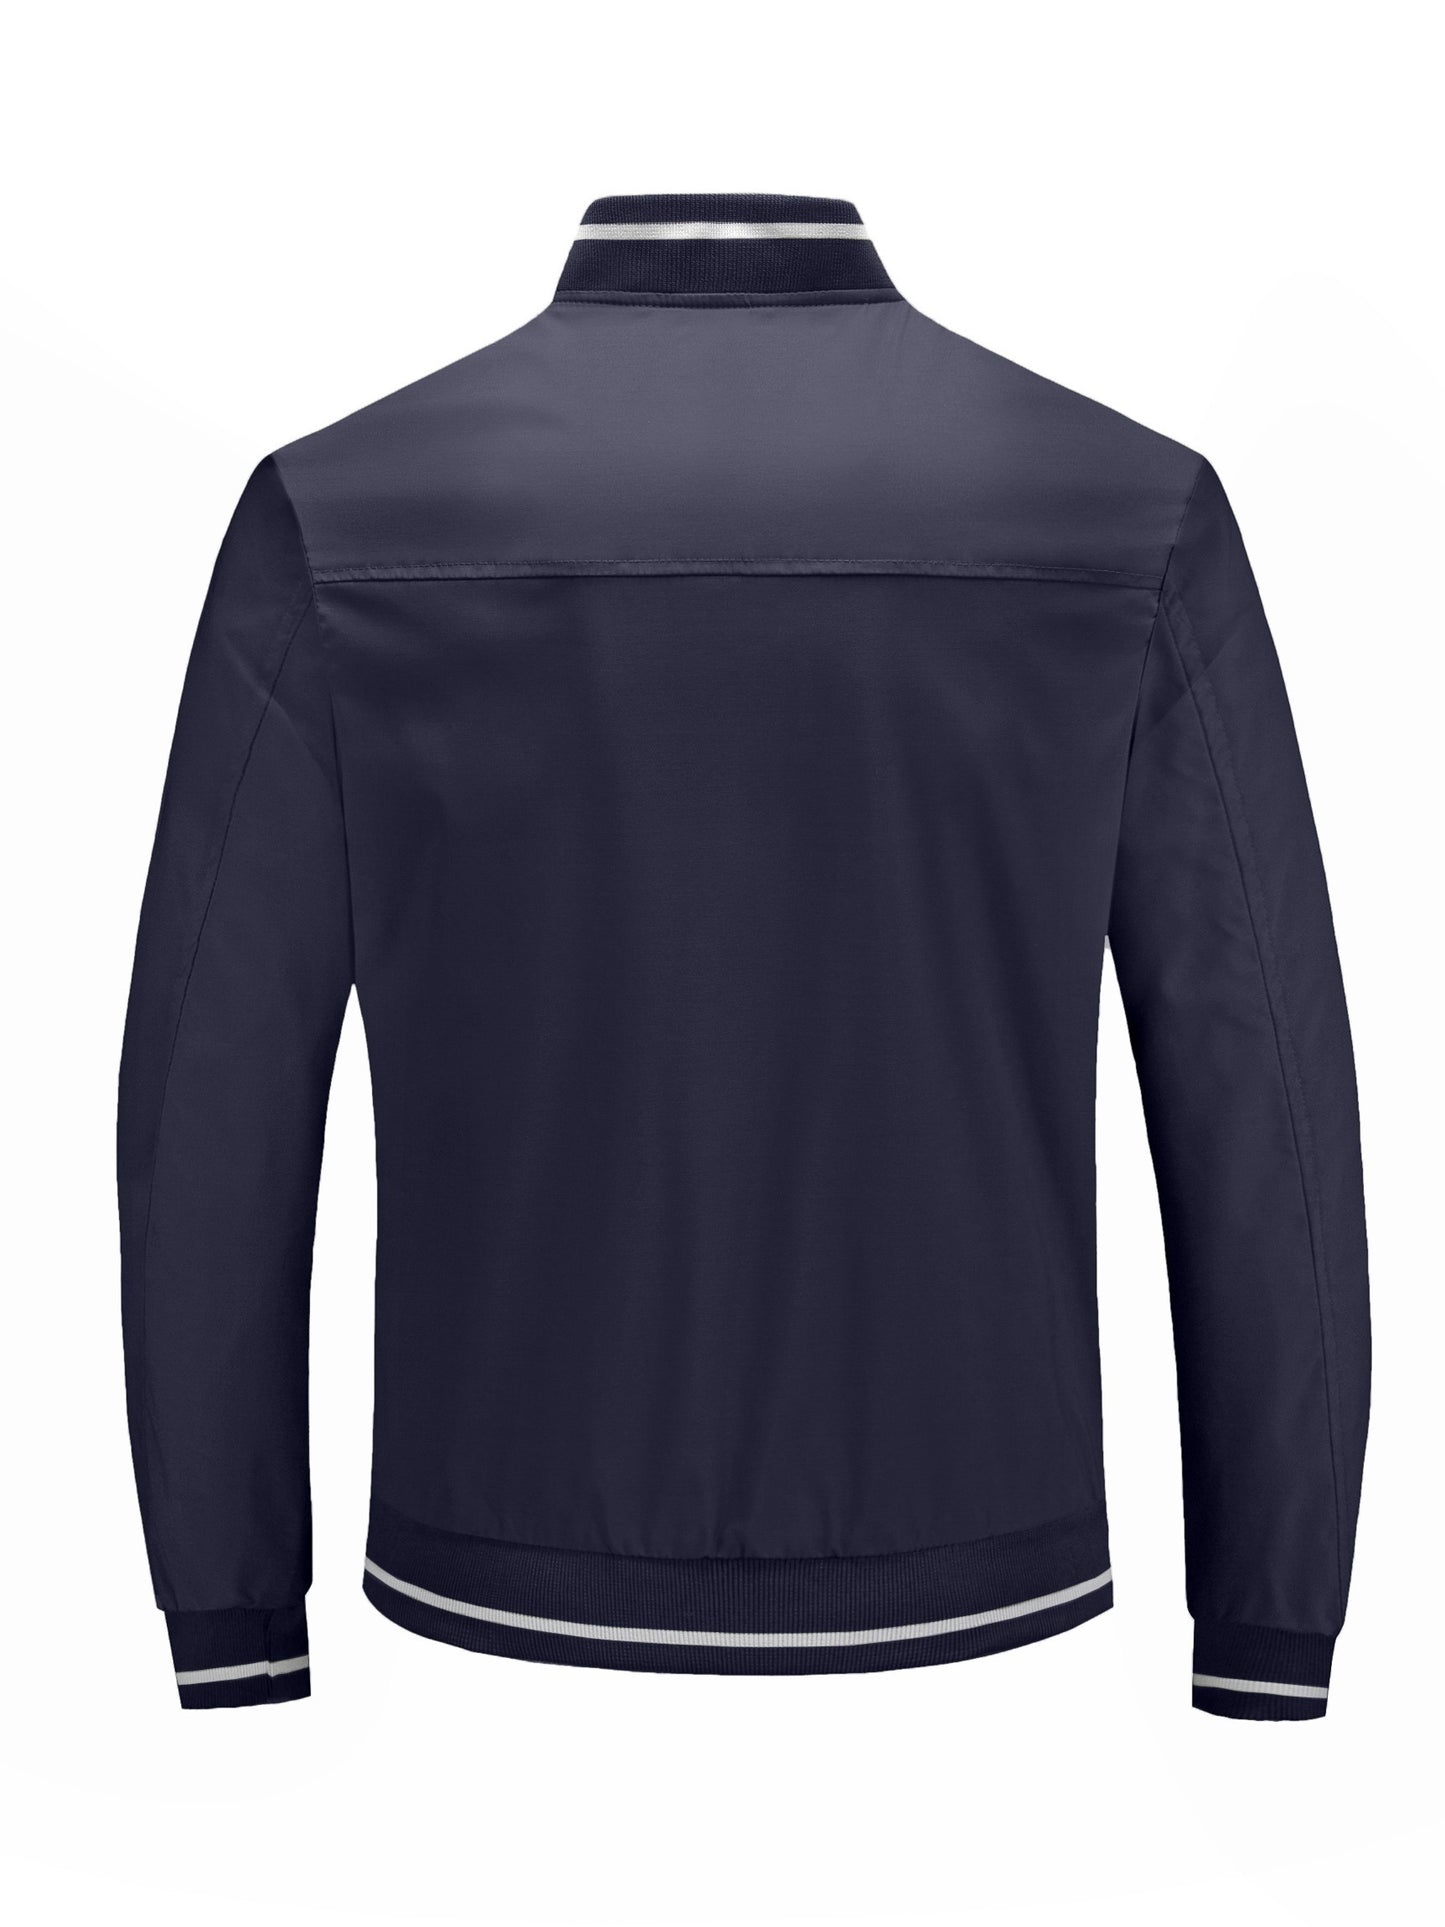 Men's Casual Zipper Long Sleeve Stand Collar Pockets Jackets For Fall & Winter